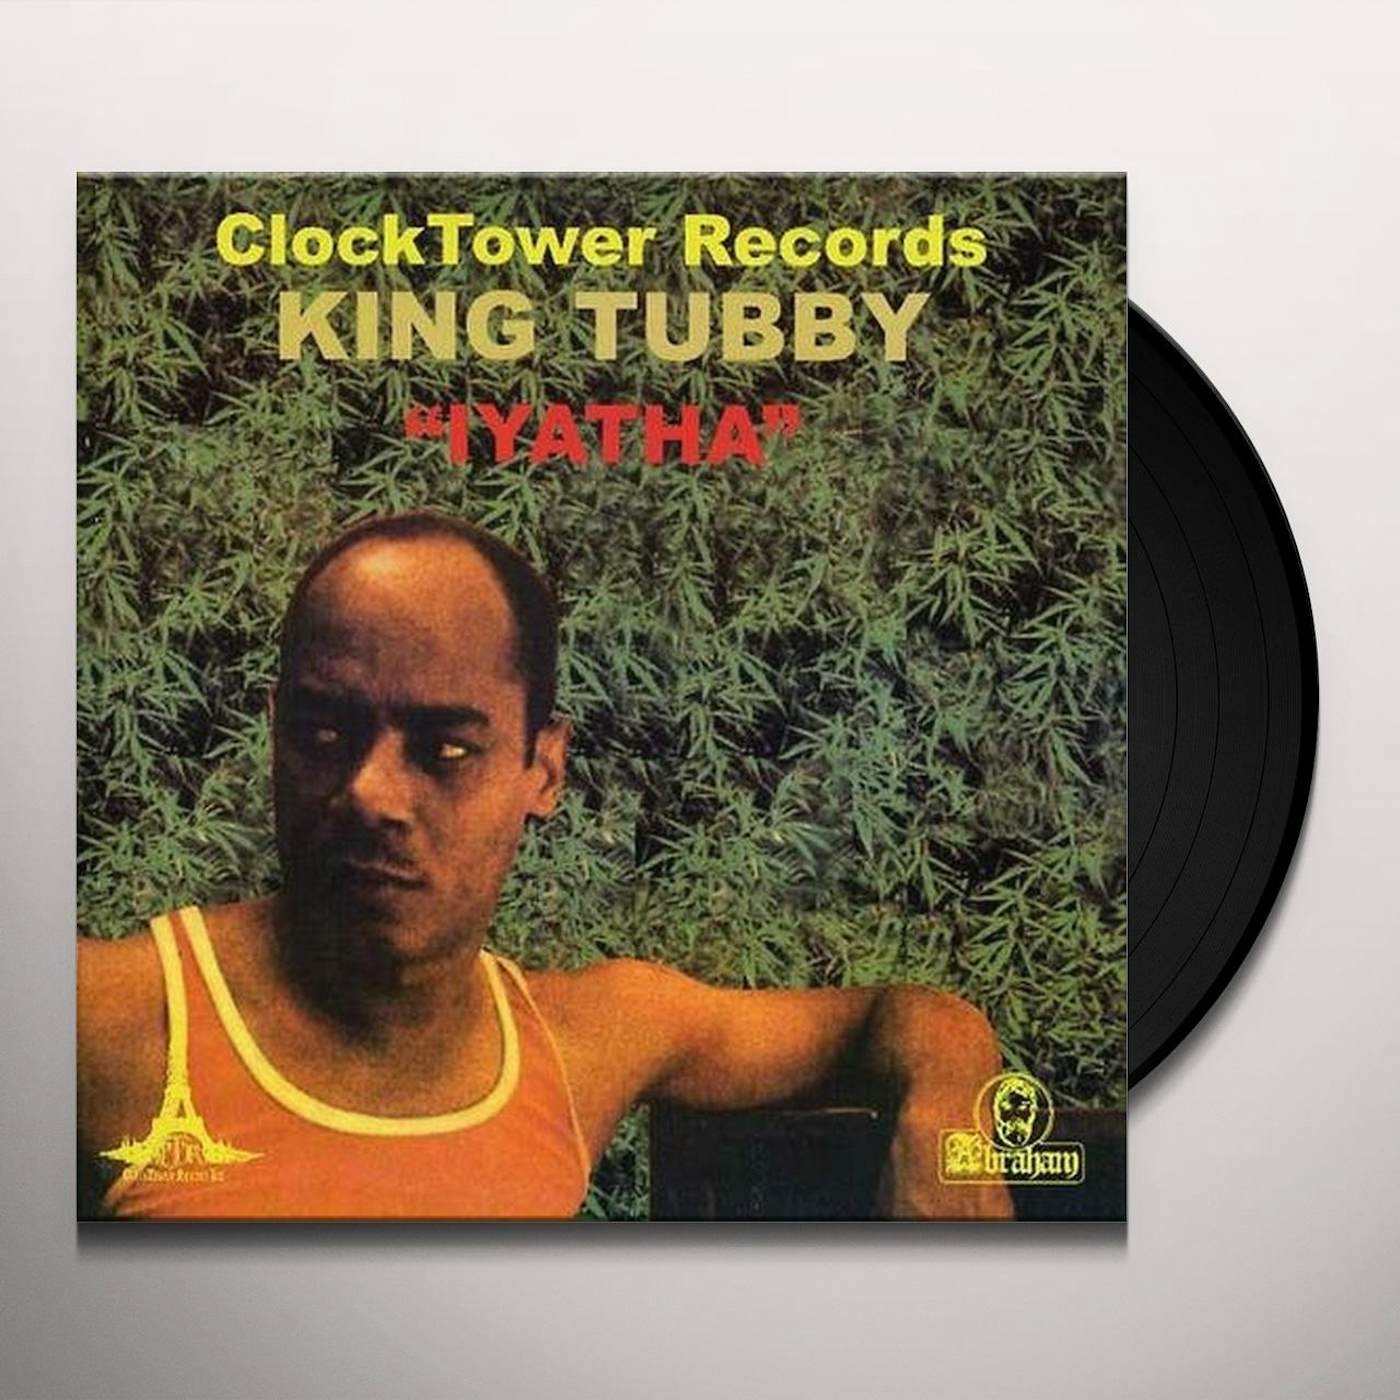 King Tubby Iyatha Vinyl Record